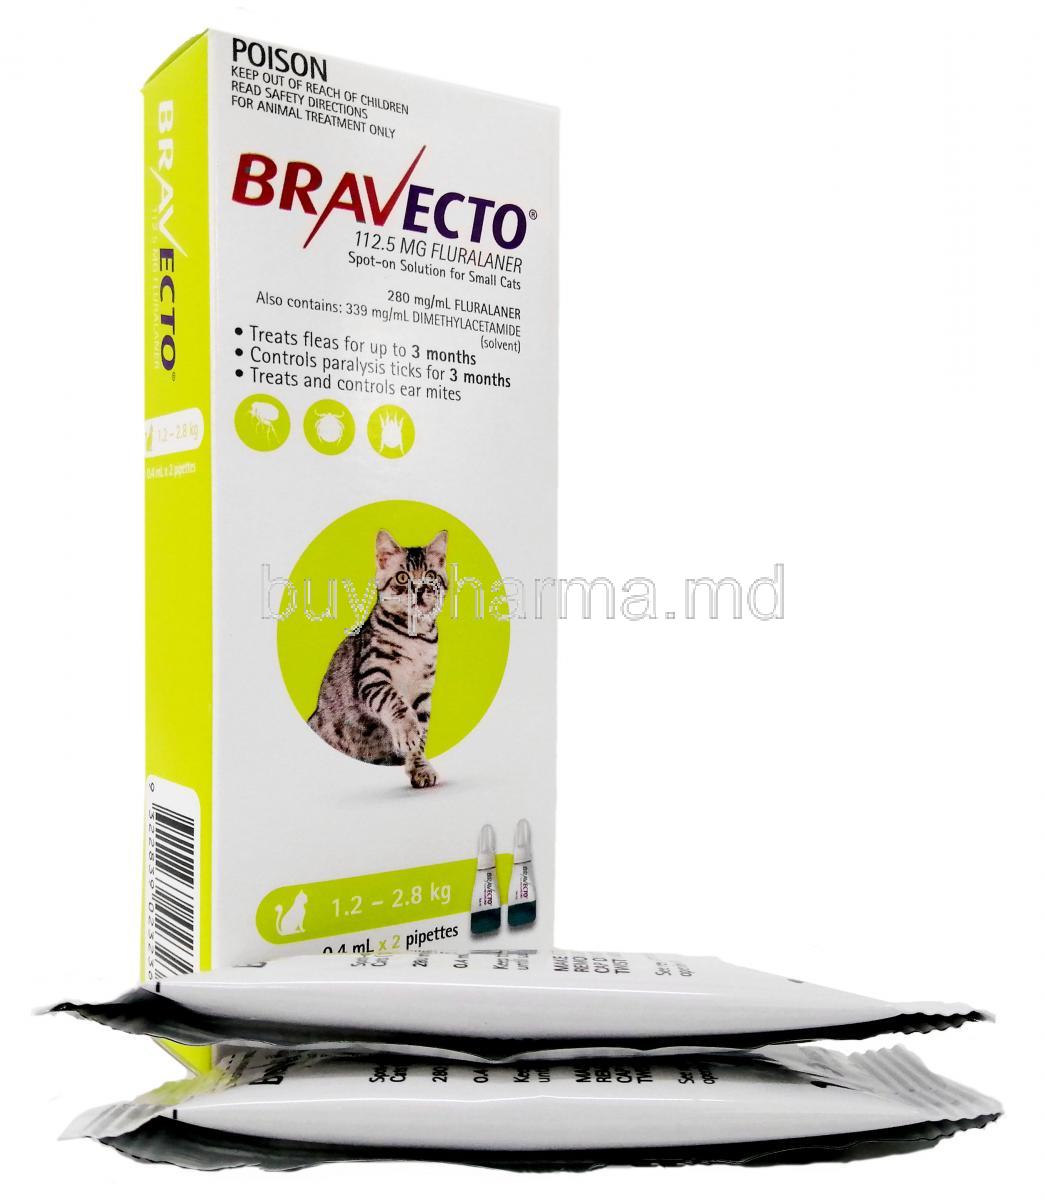 Bravecto Spot On, Fluralaner 112.5mg (1.2-2.8kg), Box,Pipettes